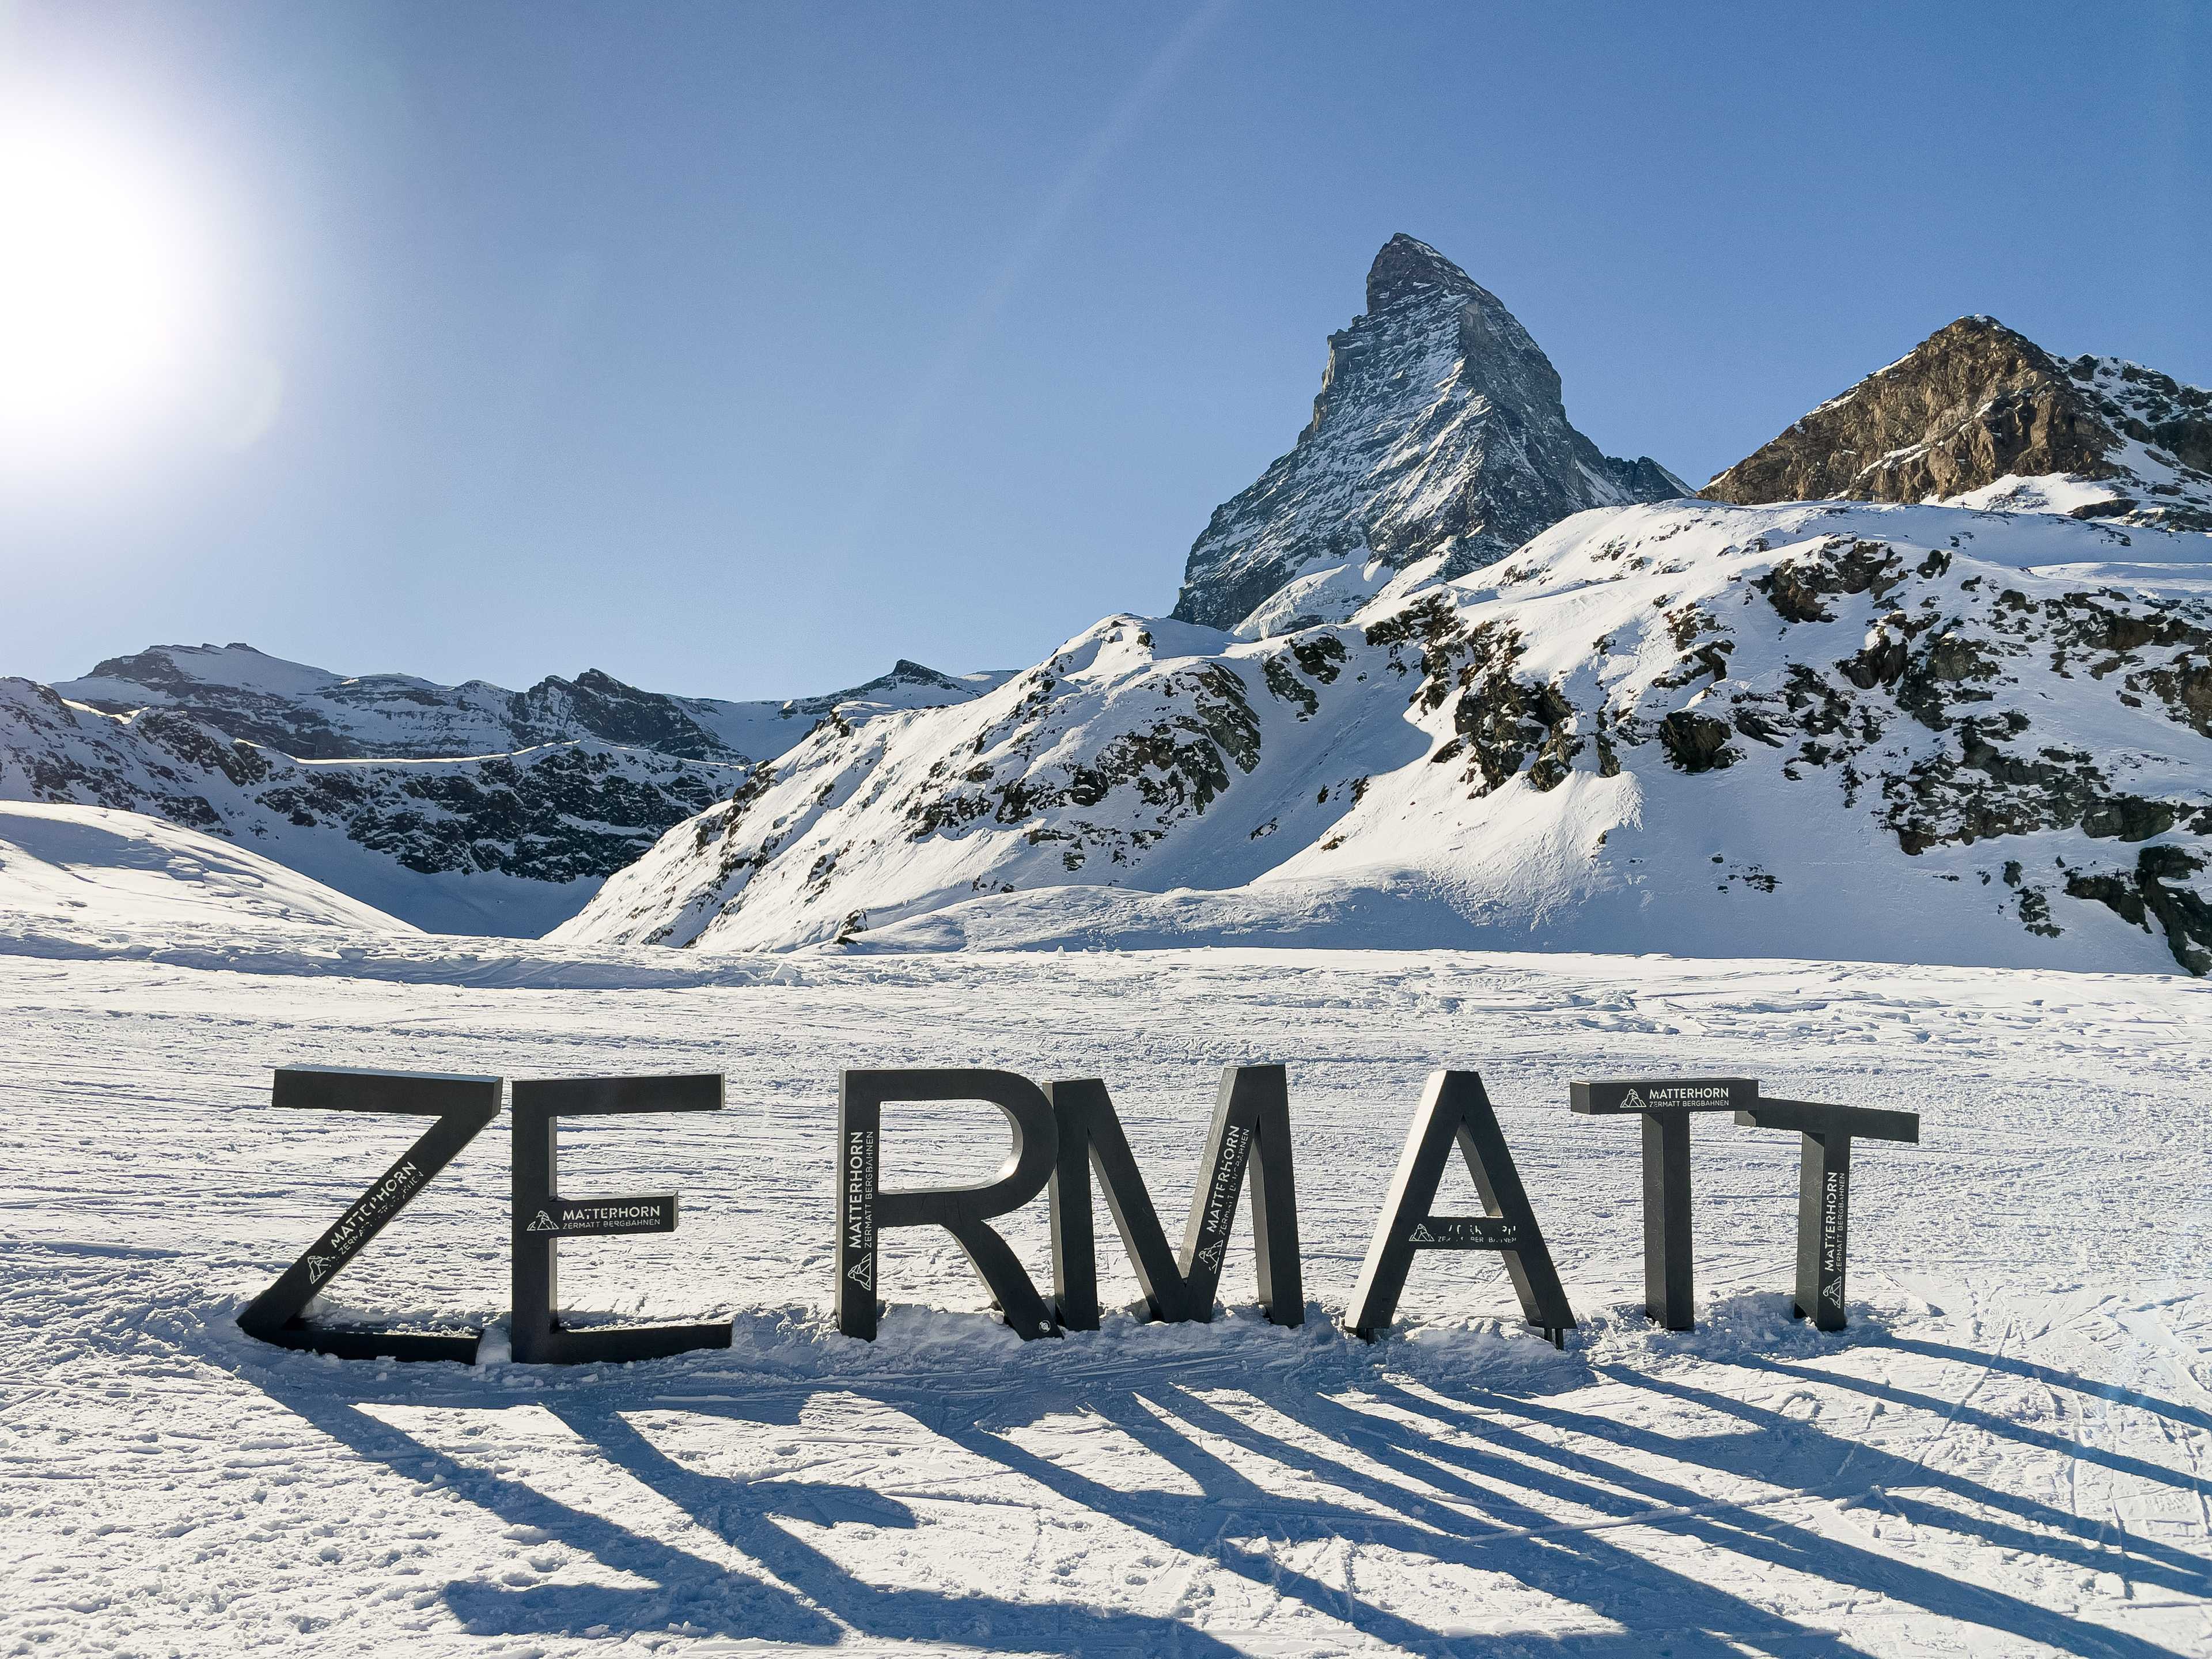 Zermatt selfie spot